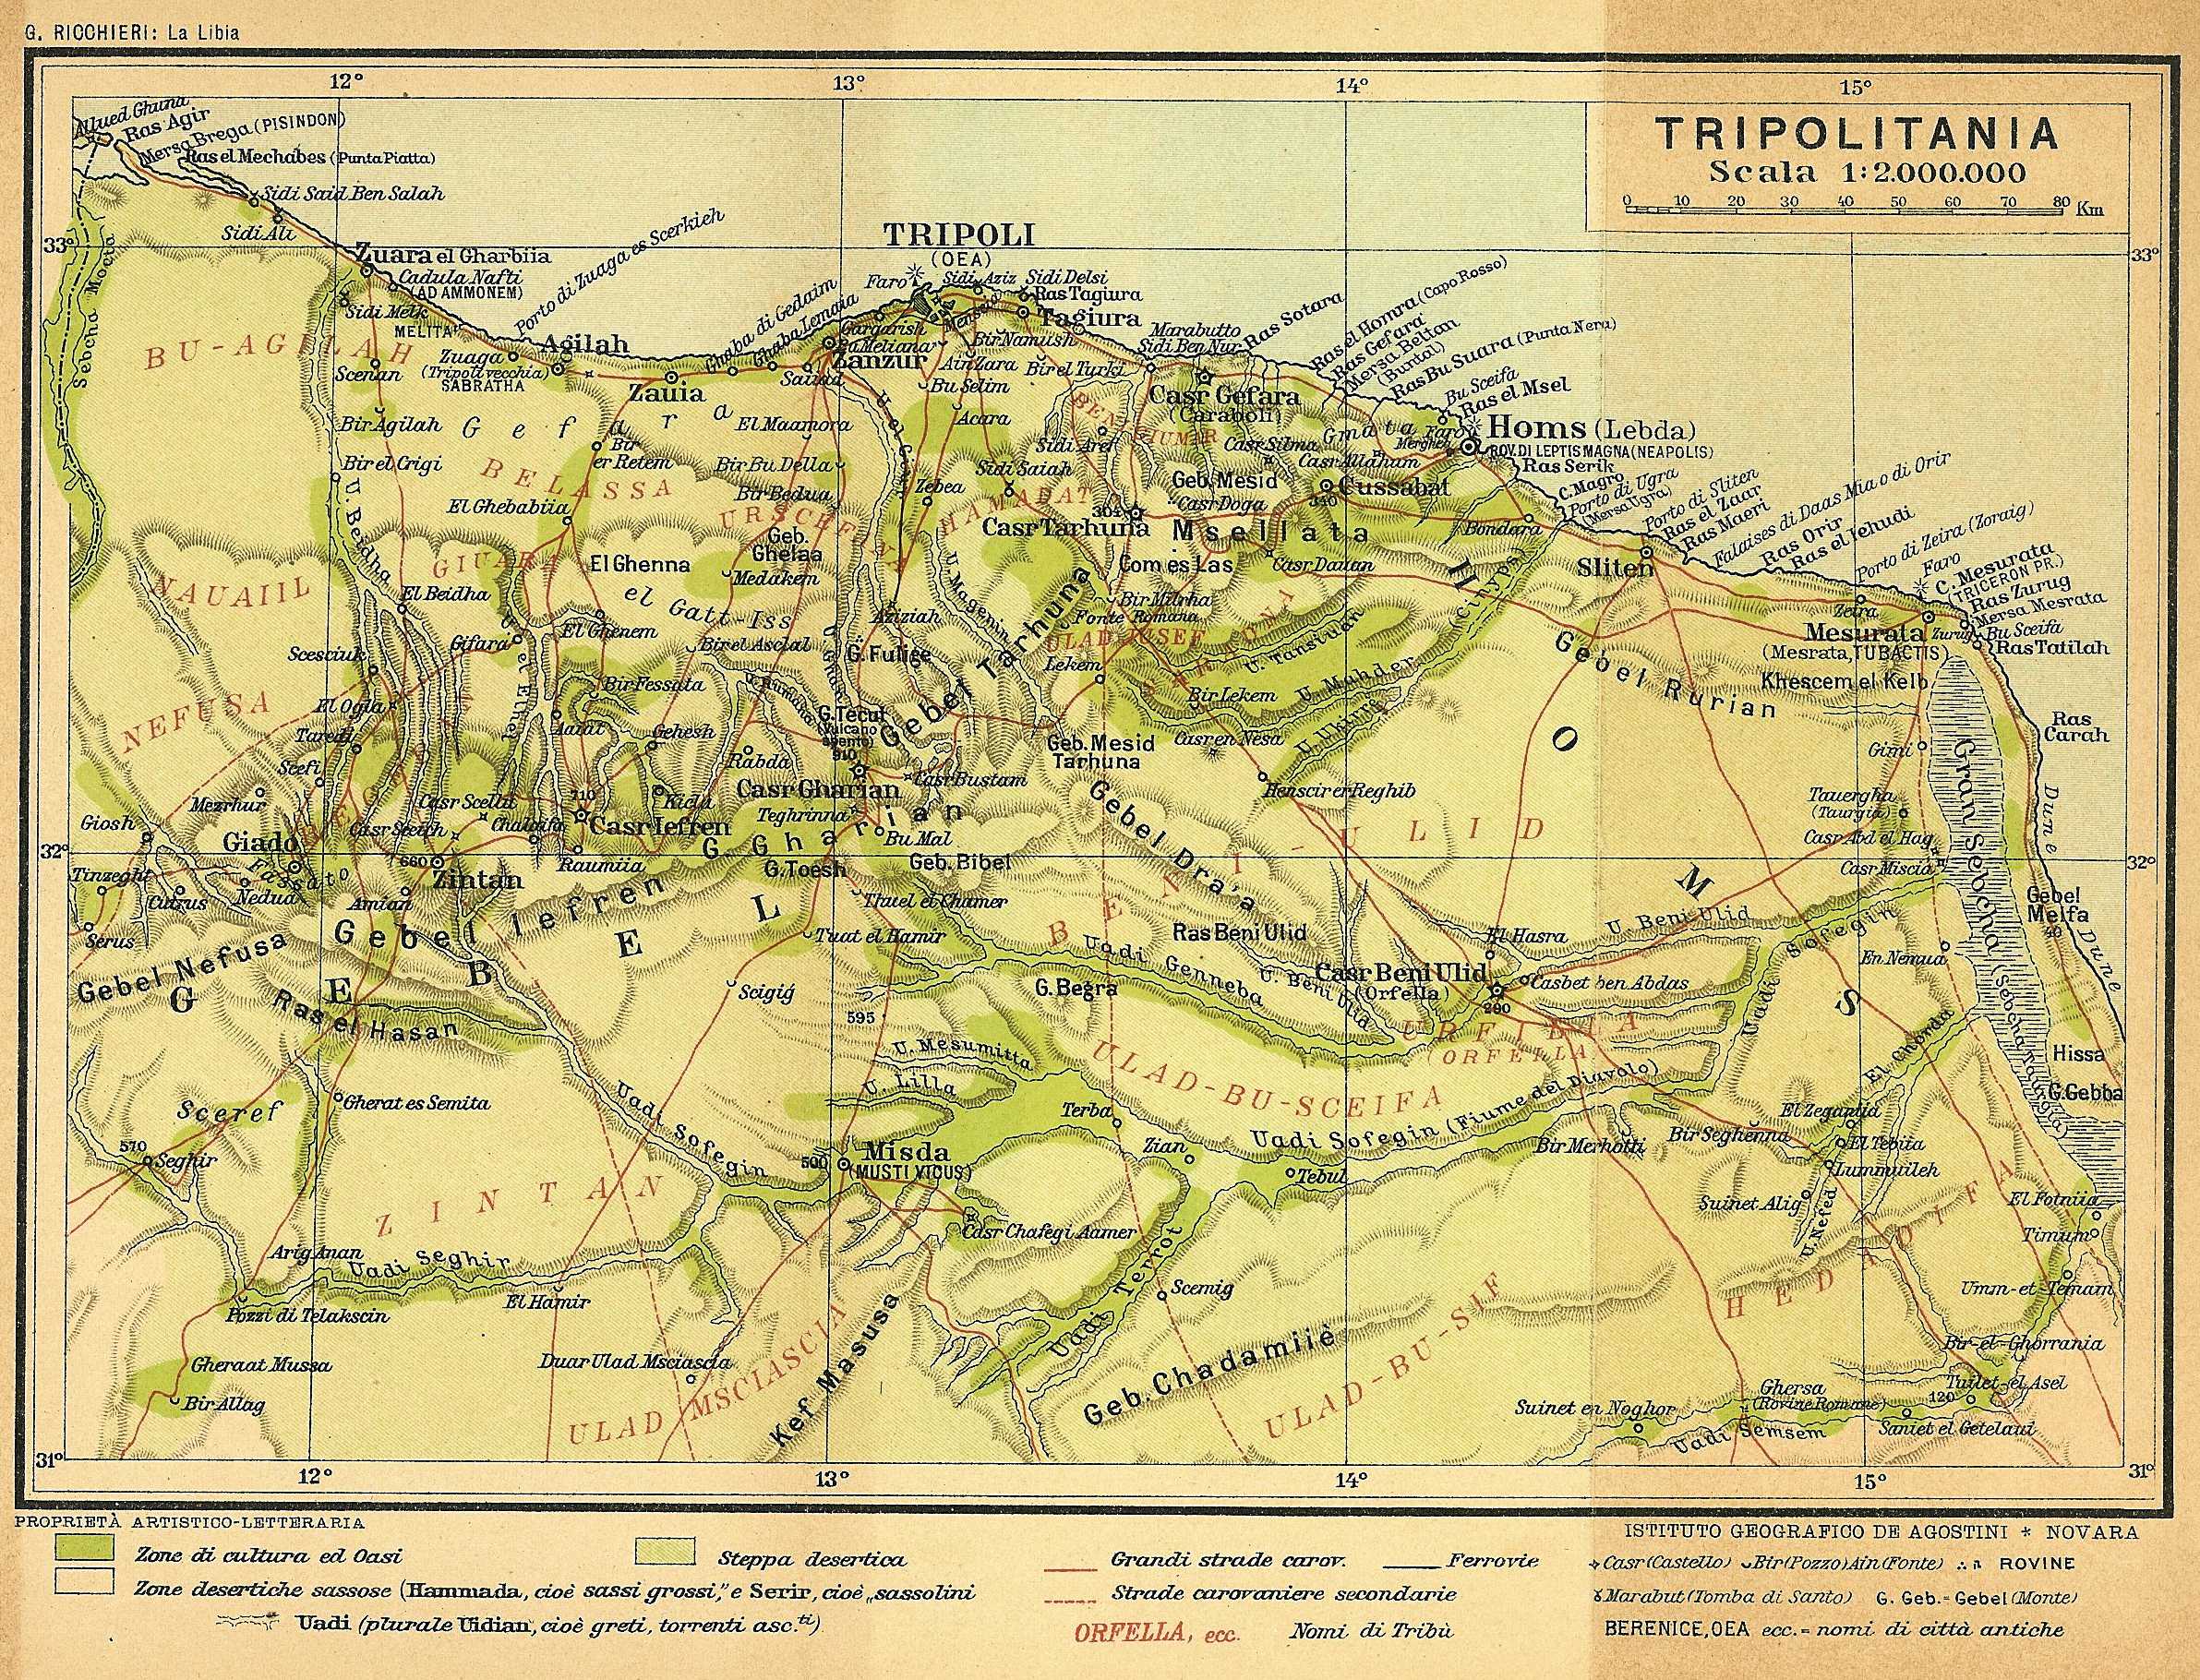 Image:Tripolitania